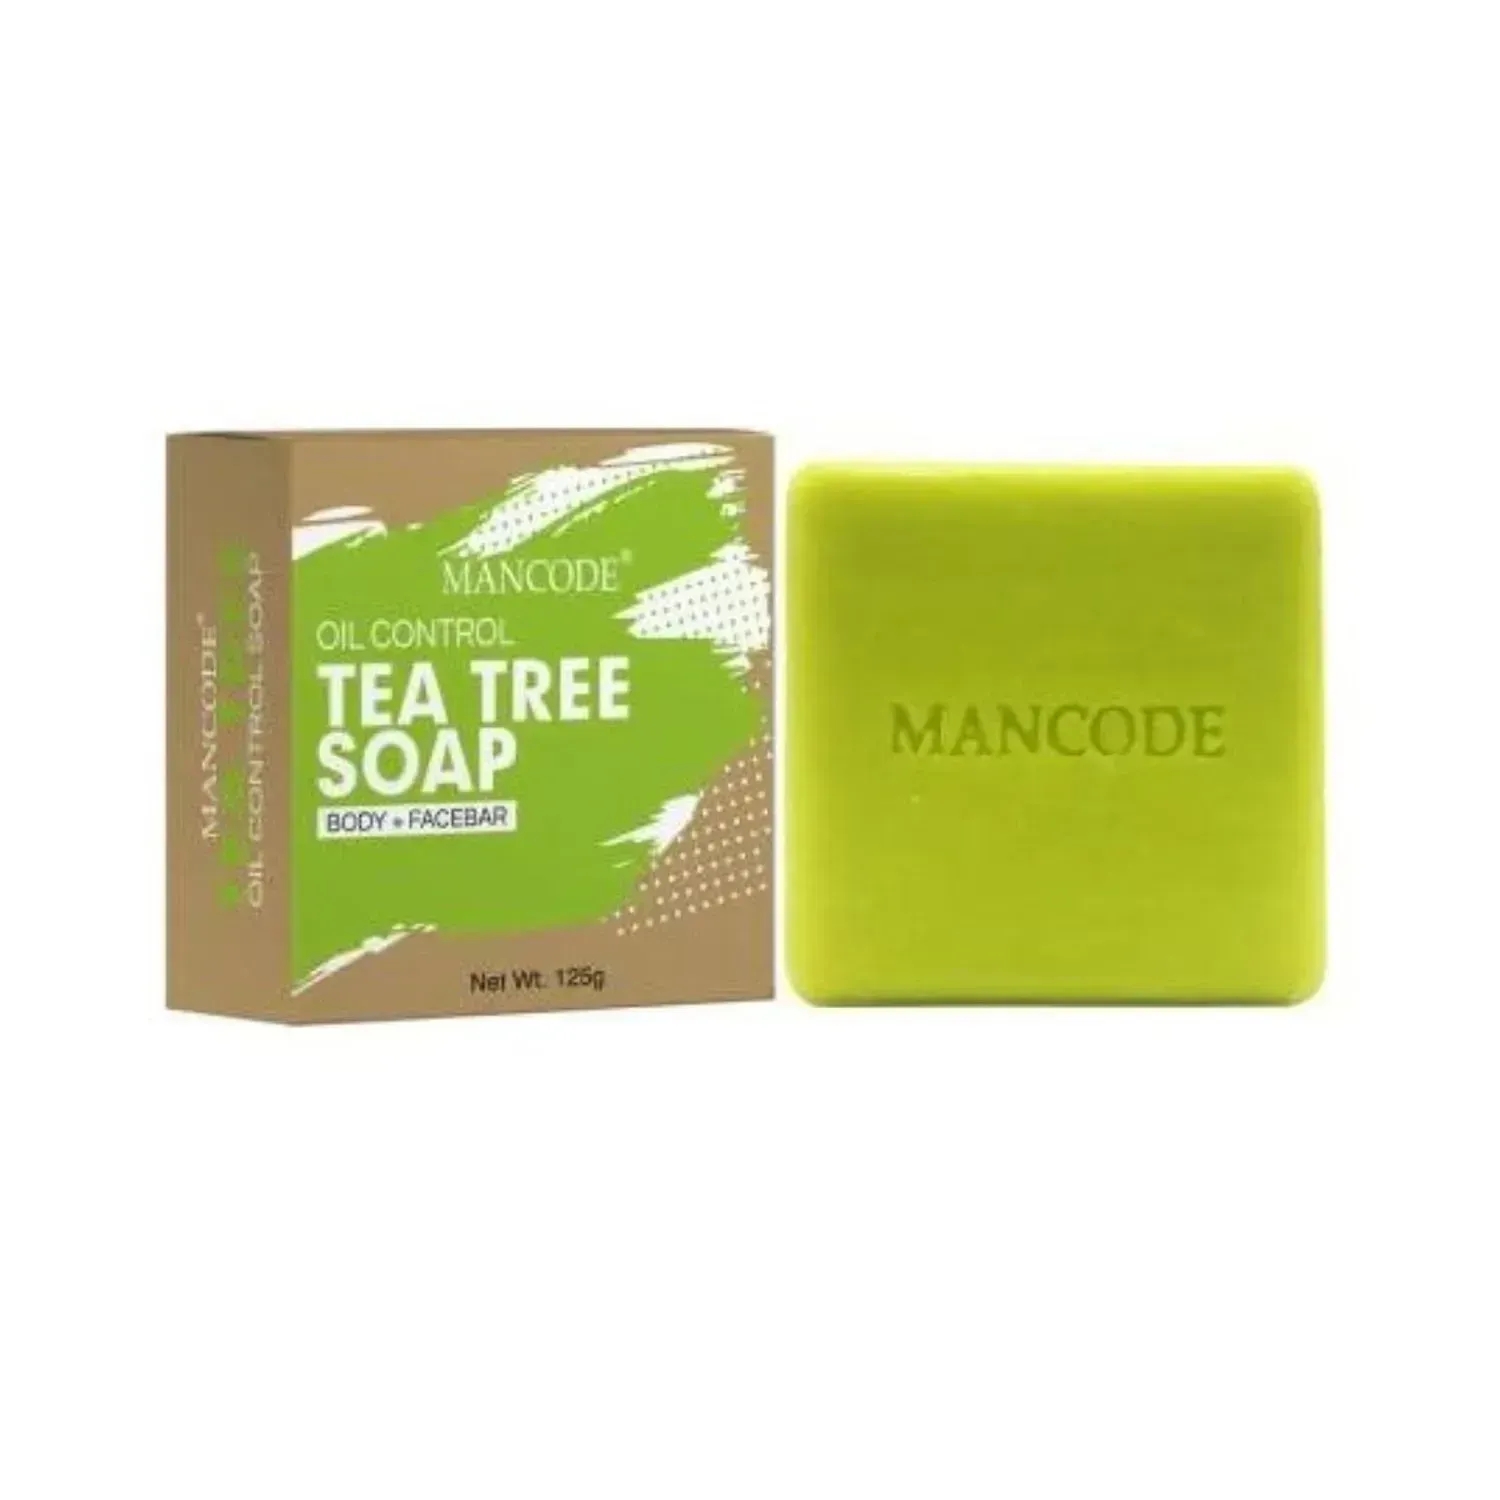 Mancode | Mancode Oil Control Tea Tree Soap - (125g)